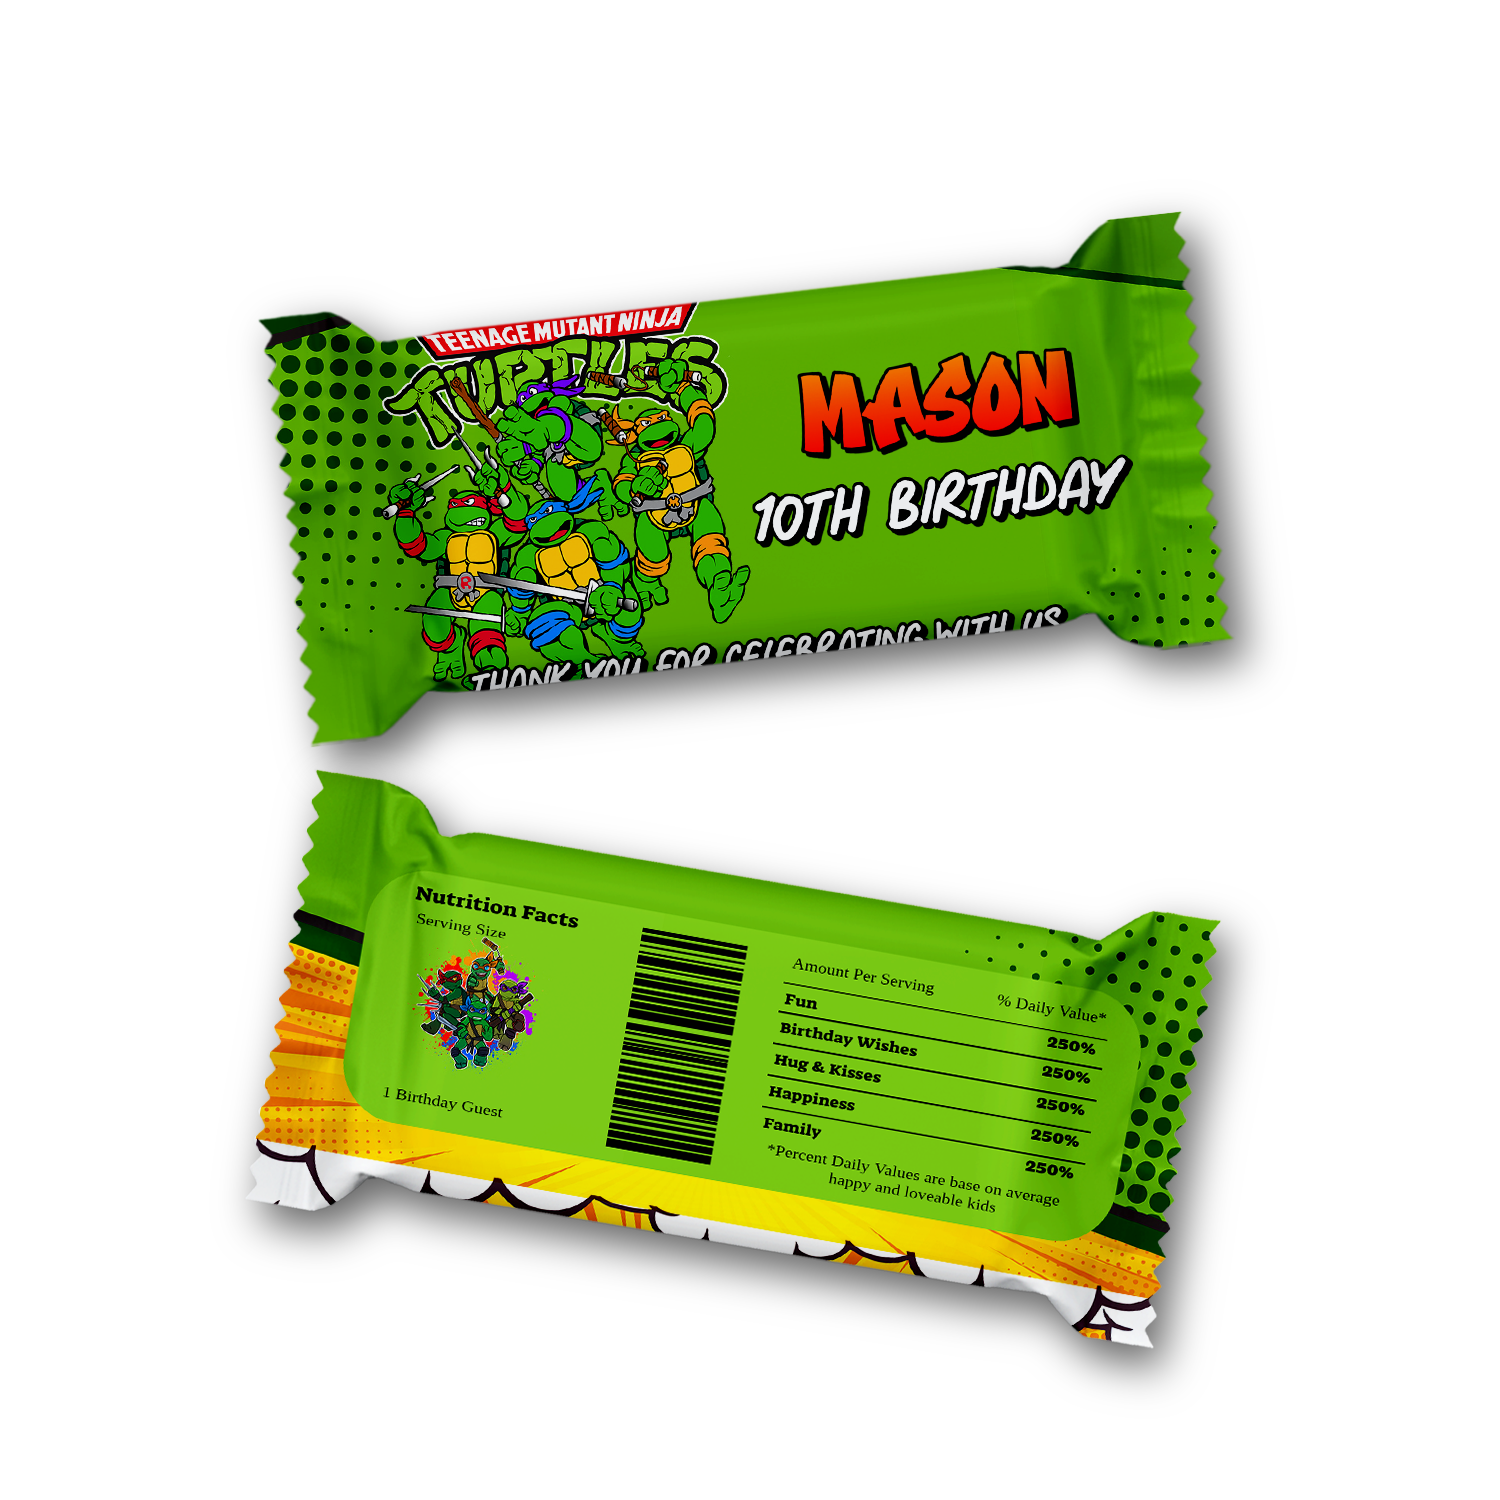 Teenage Mutant Ninja Turtles Rice Krispies treats label and candy bar label